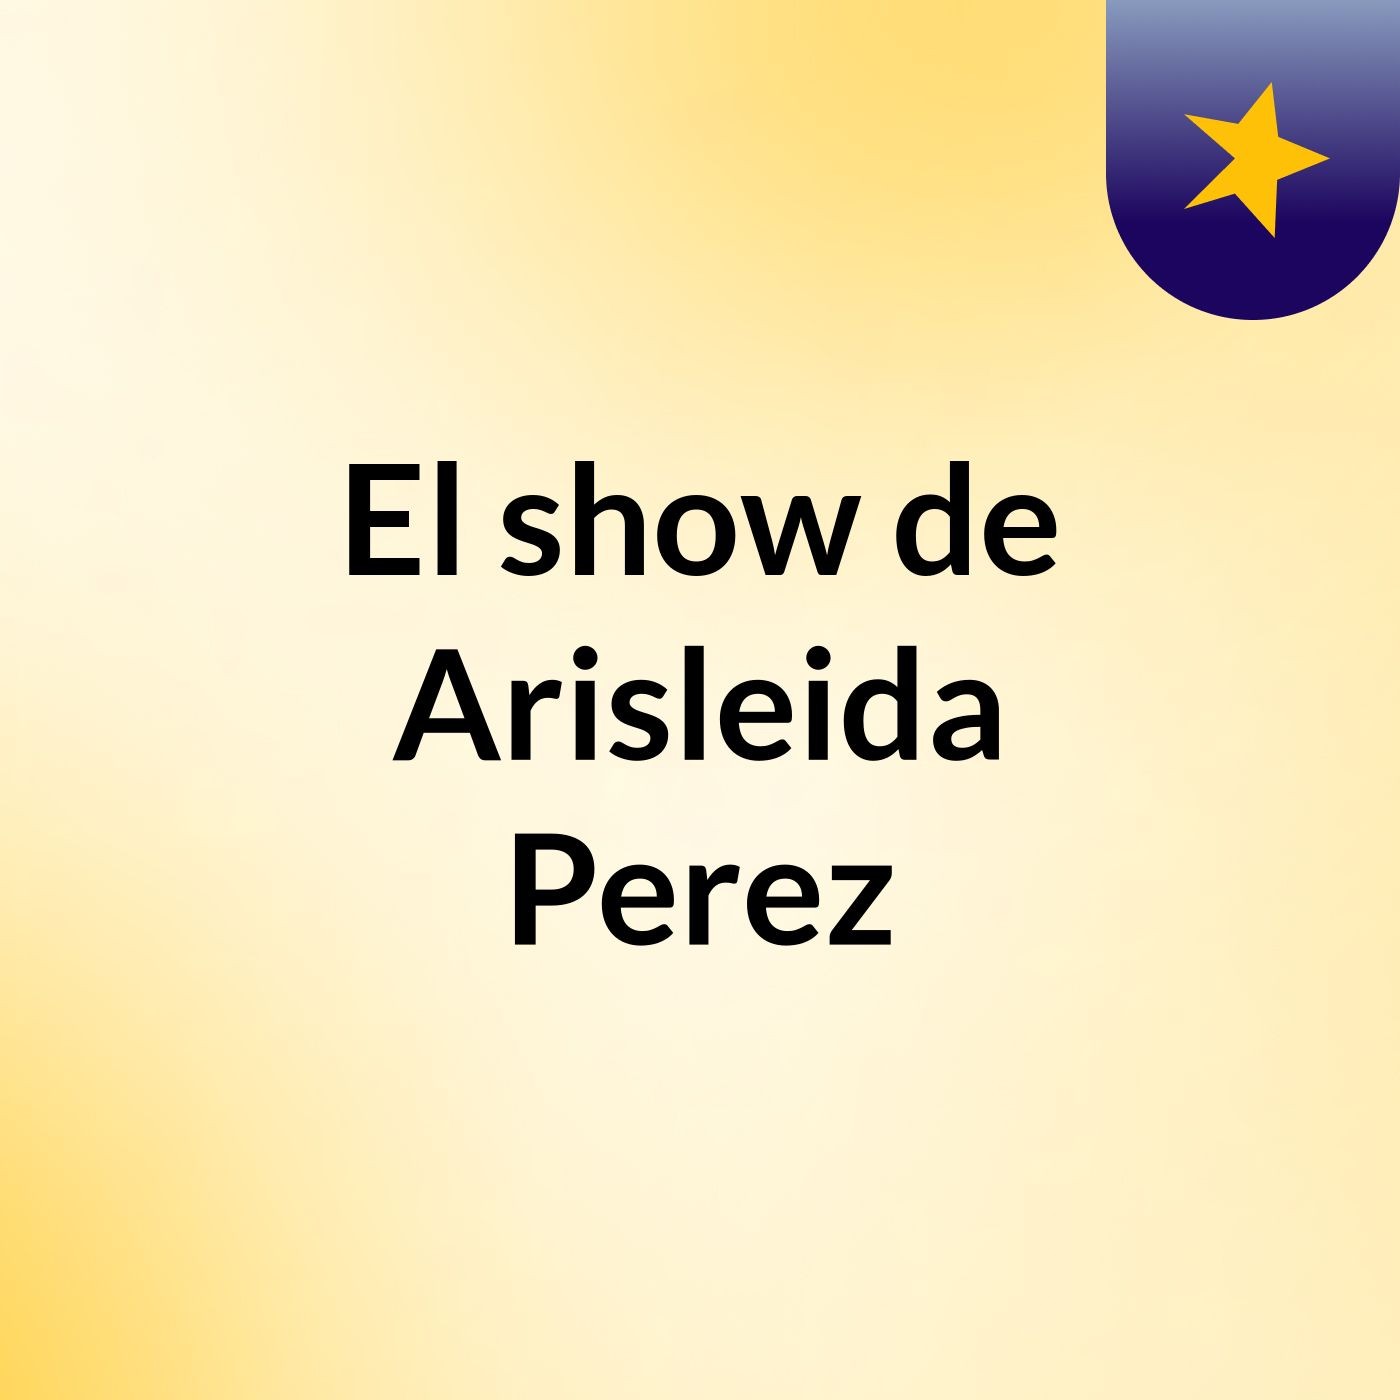 El show de Arisleida Perez